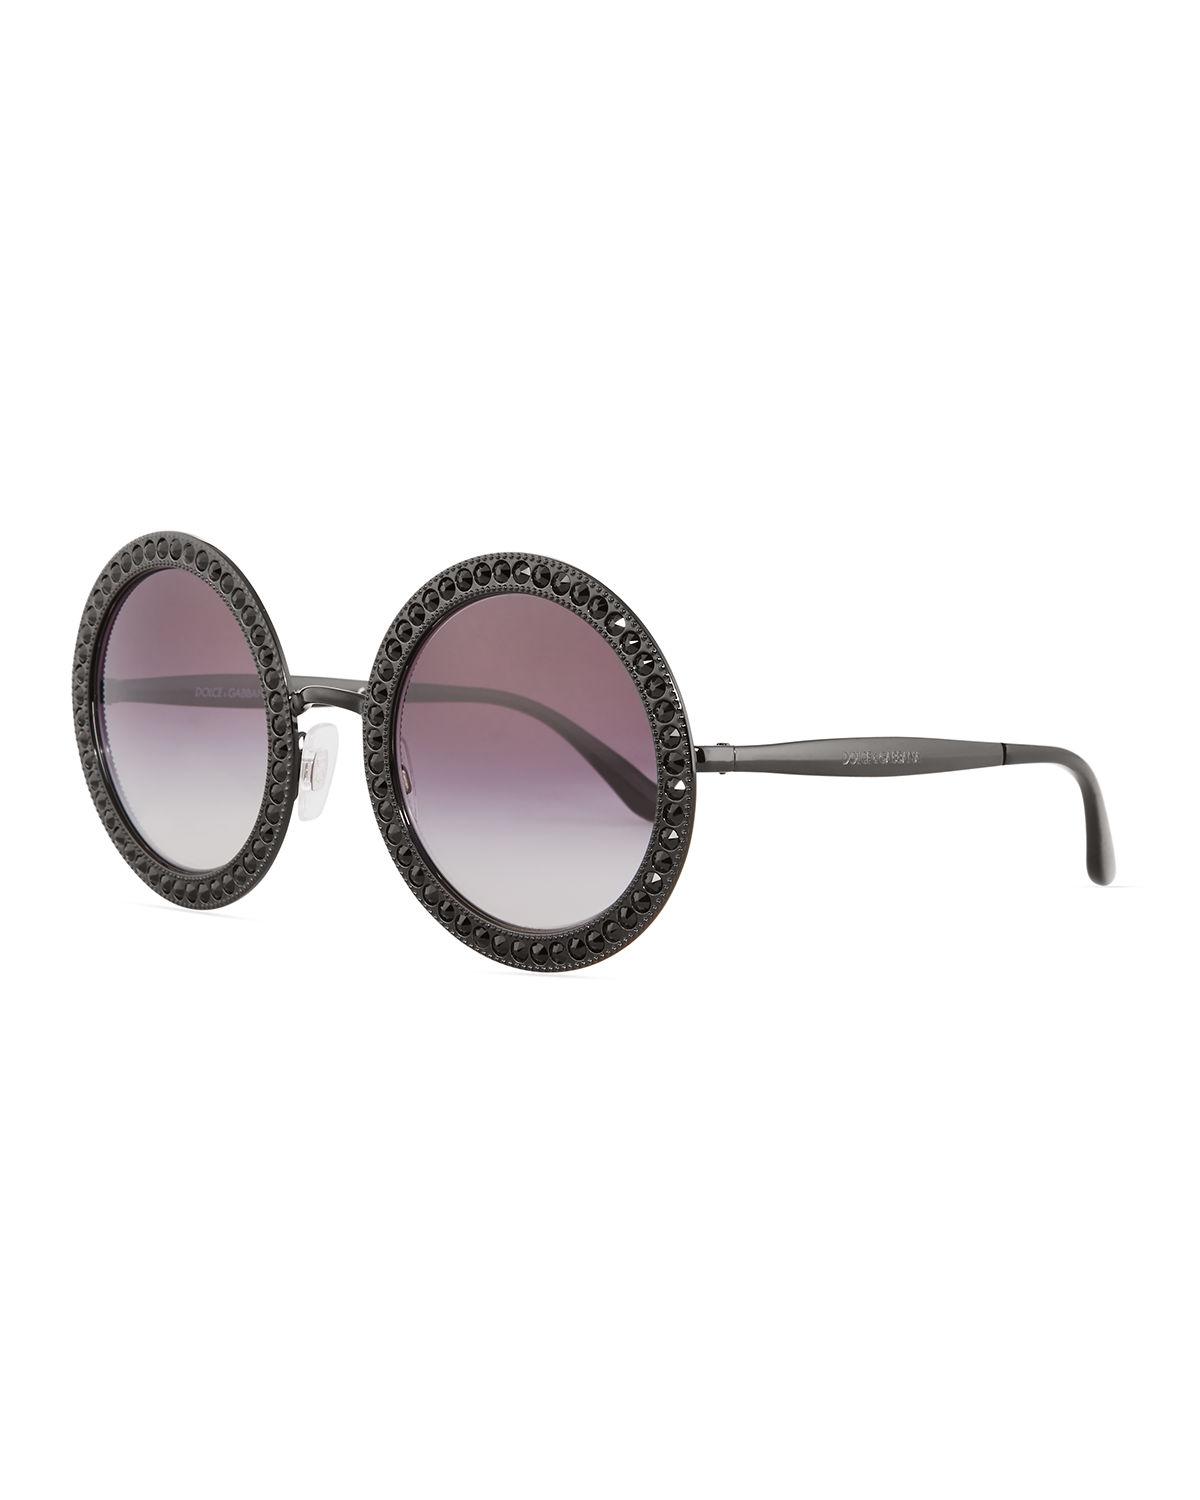 d&g round sunglasses